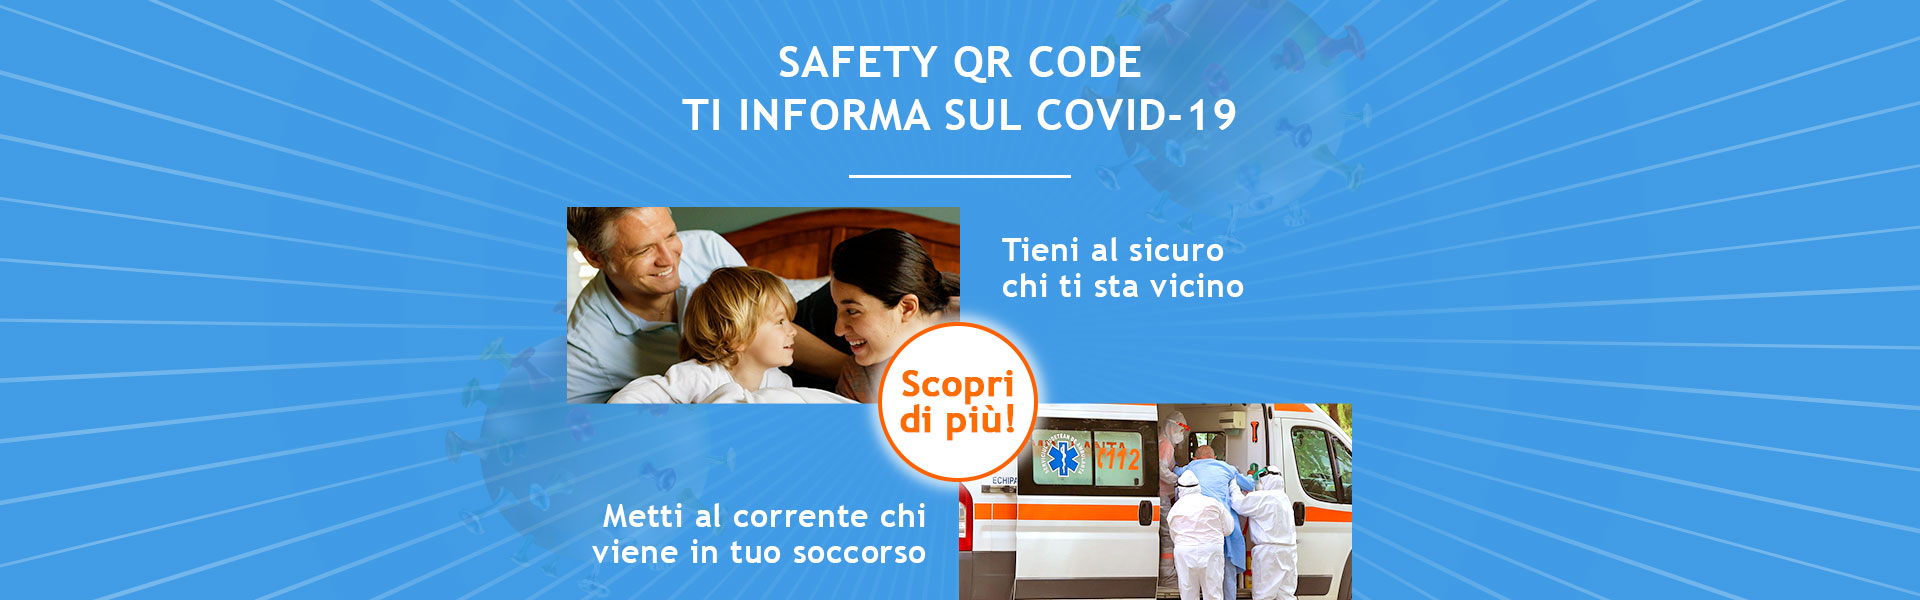 13-safety-qr-code-coronavirus